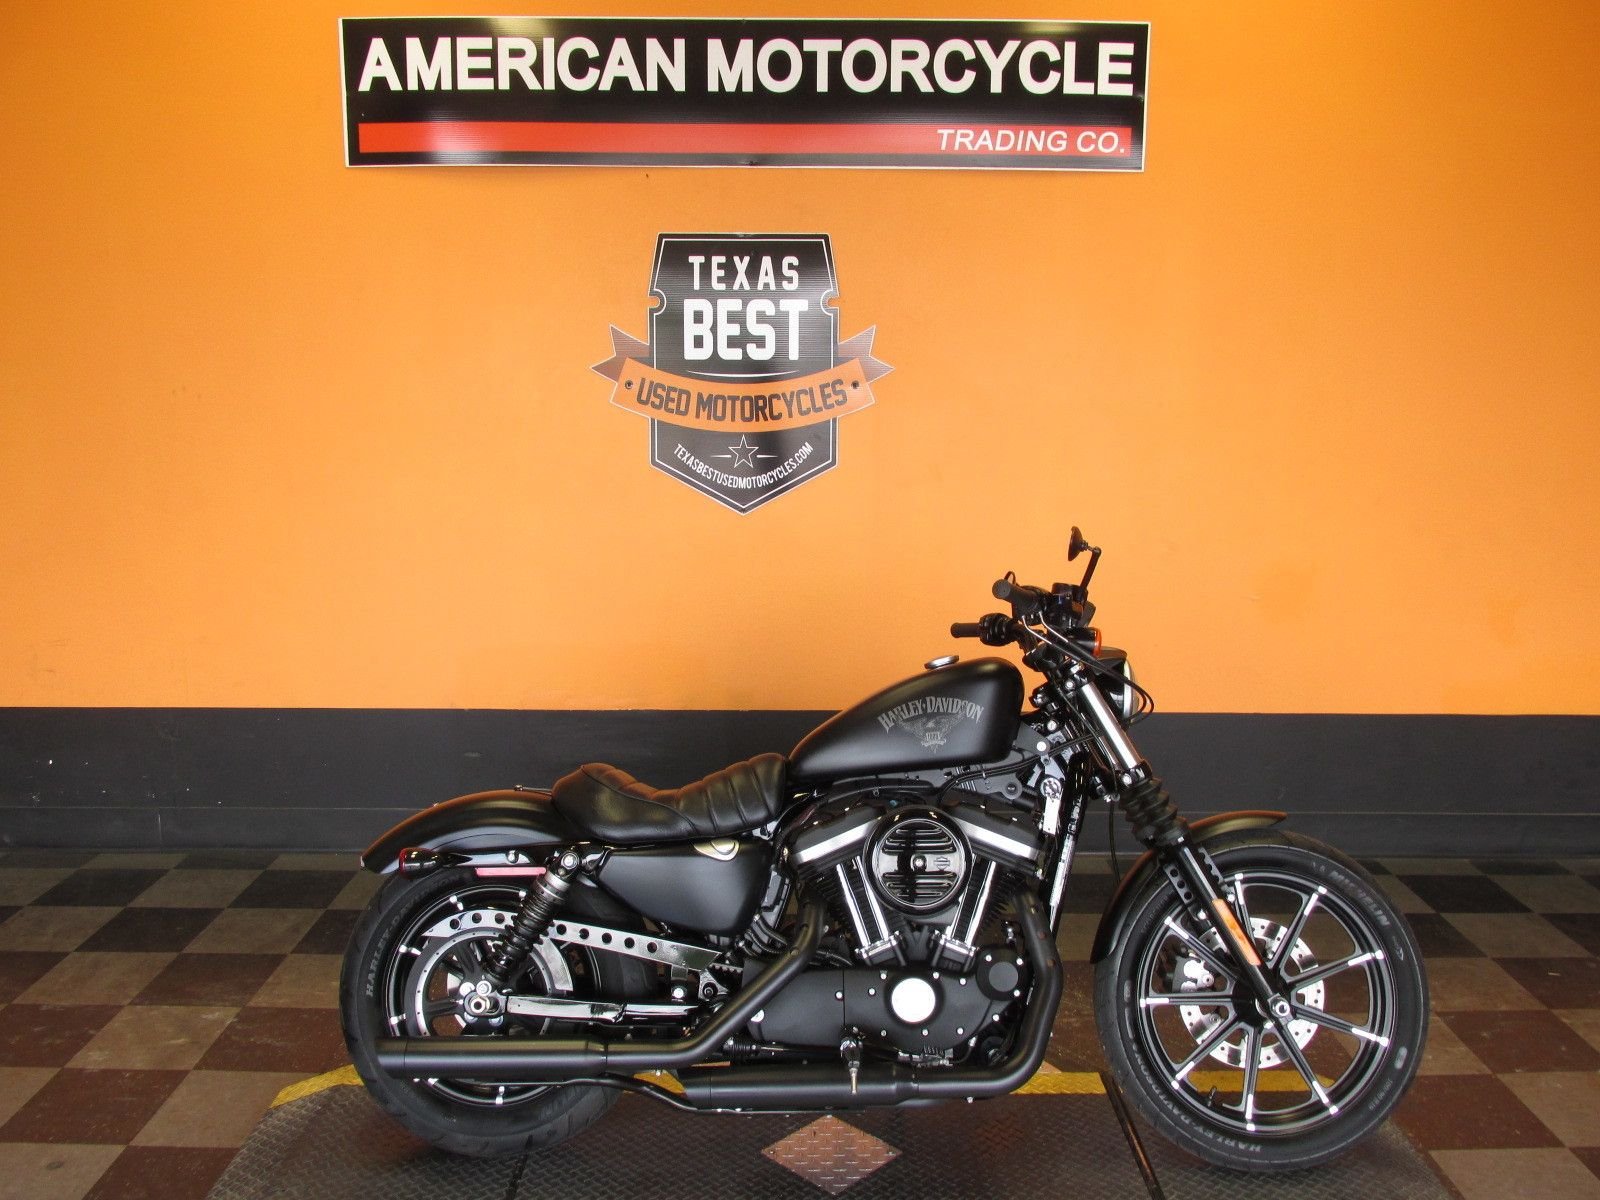 2016 Harley Davidson Sportster 883 American Motorcycle Trading Company Used Harley Davidson Motorcycles